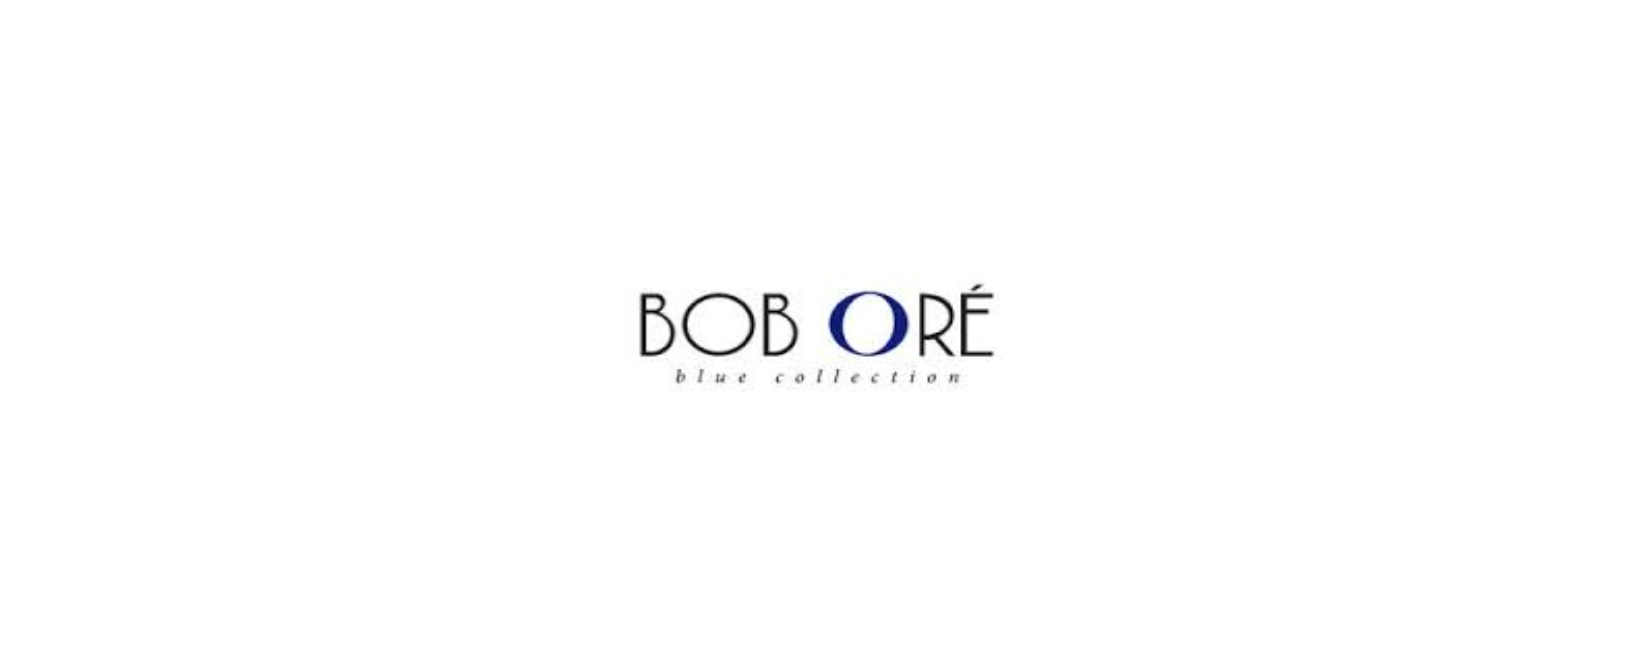 Bob Ore Blue Collection Discount Code 2022